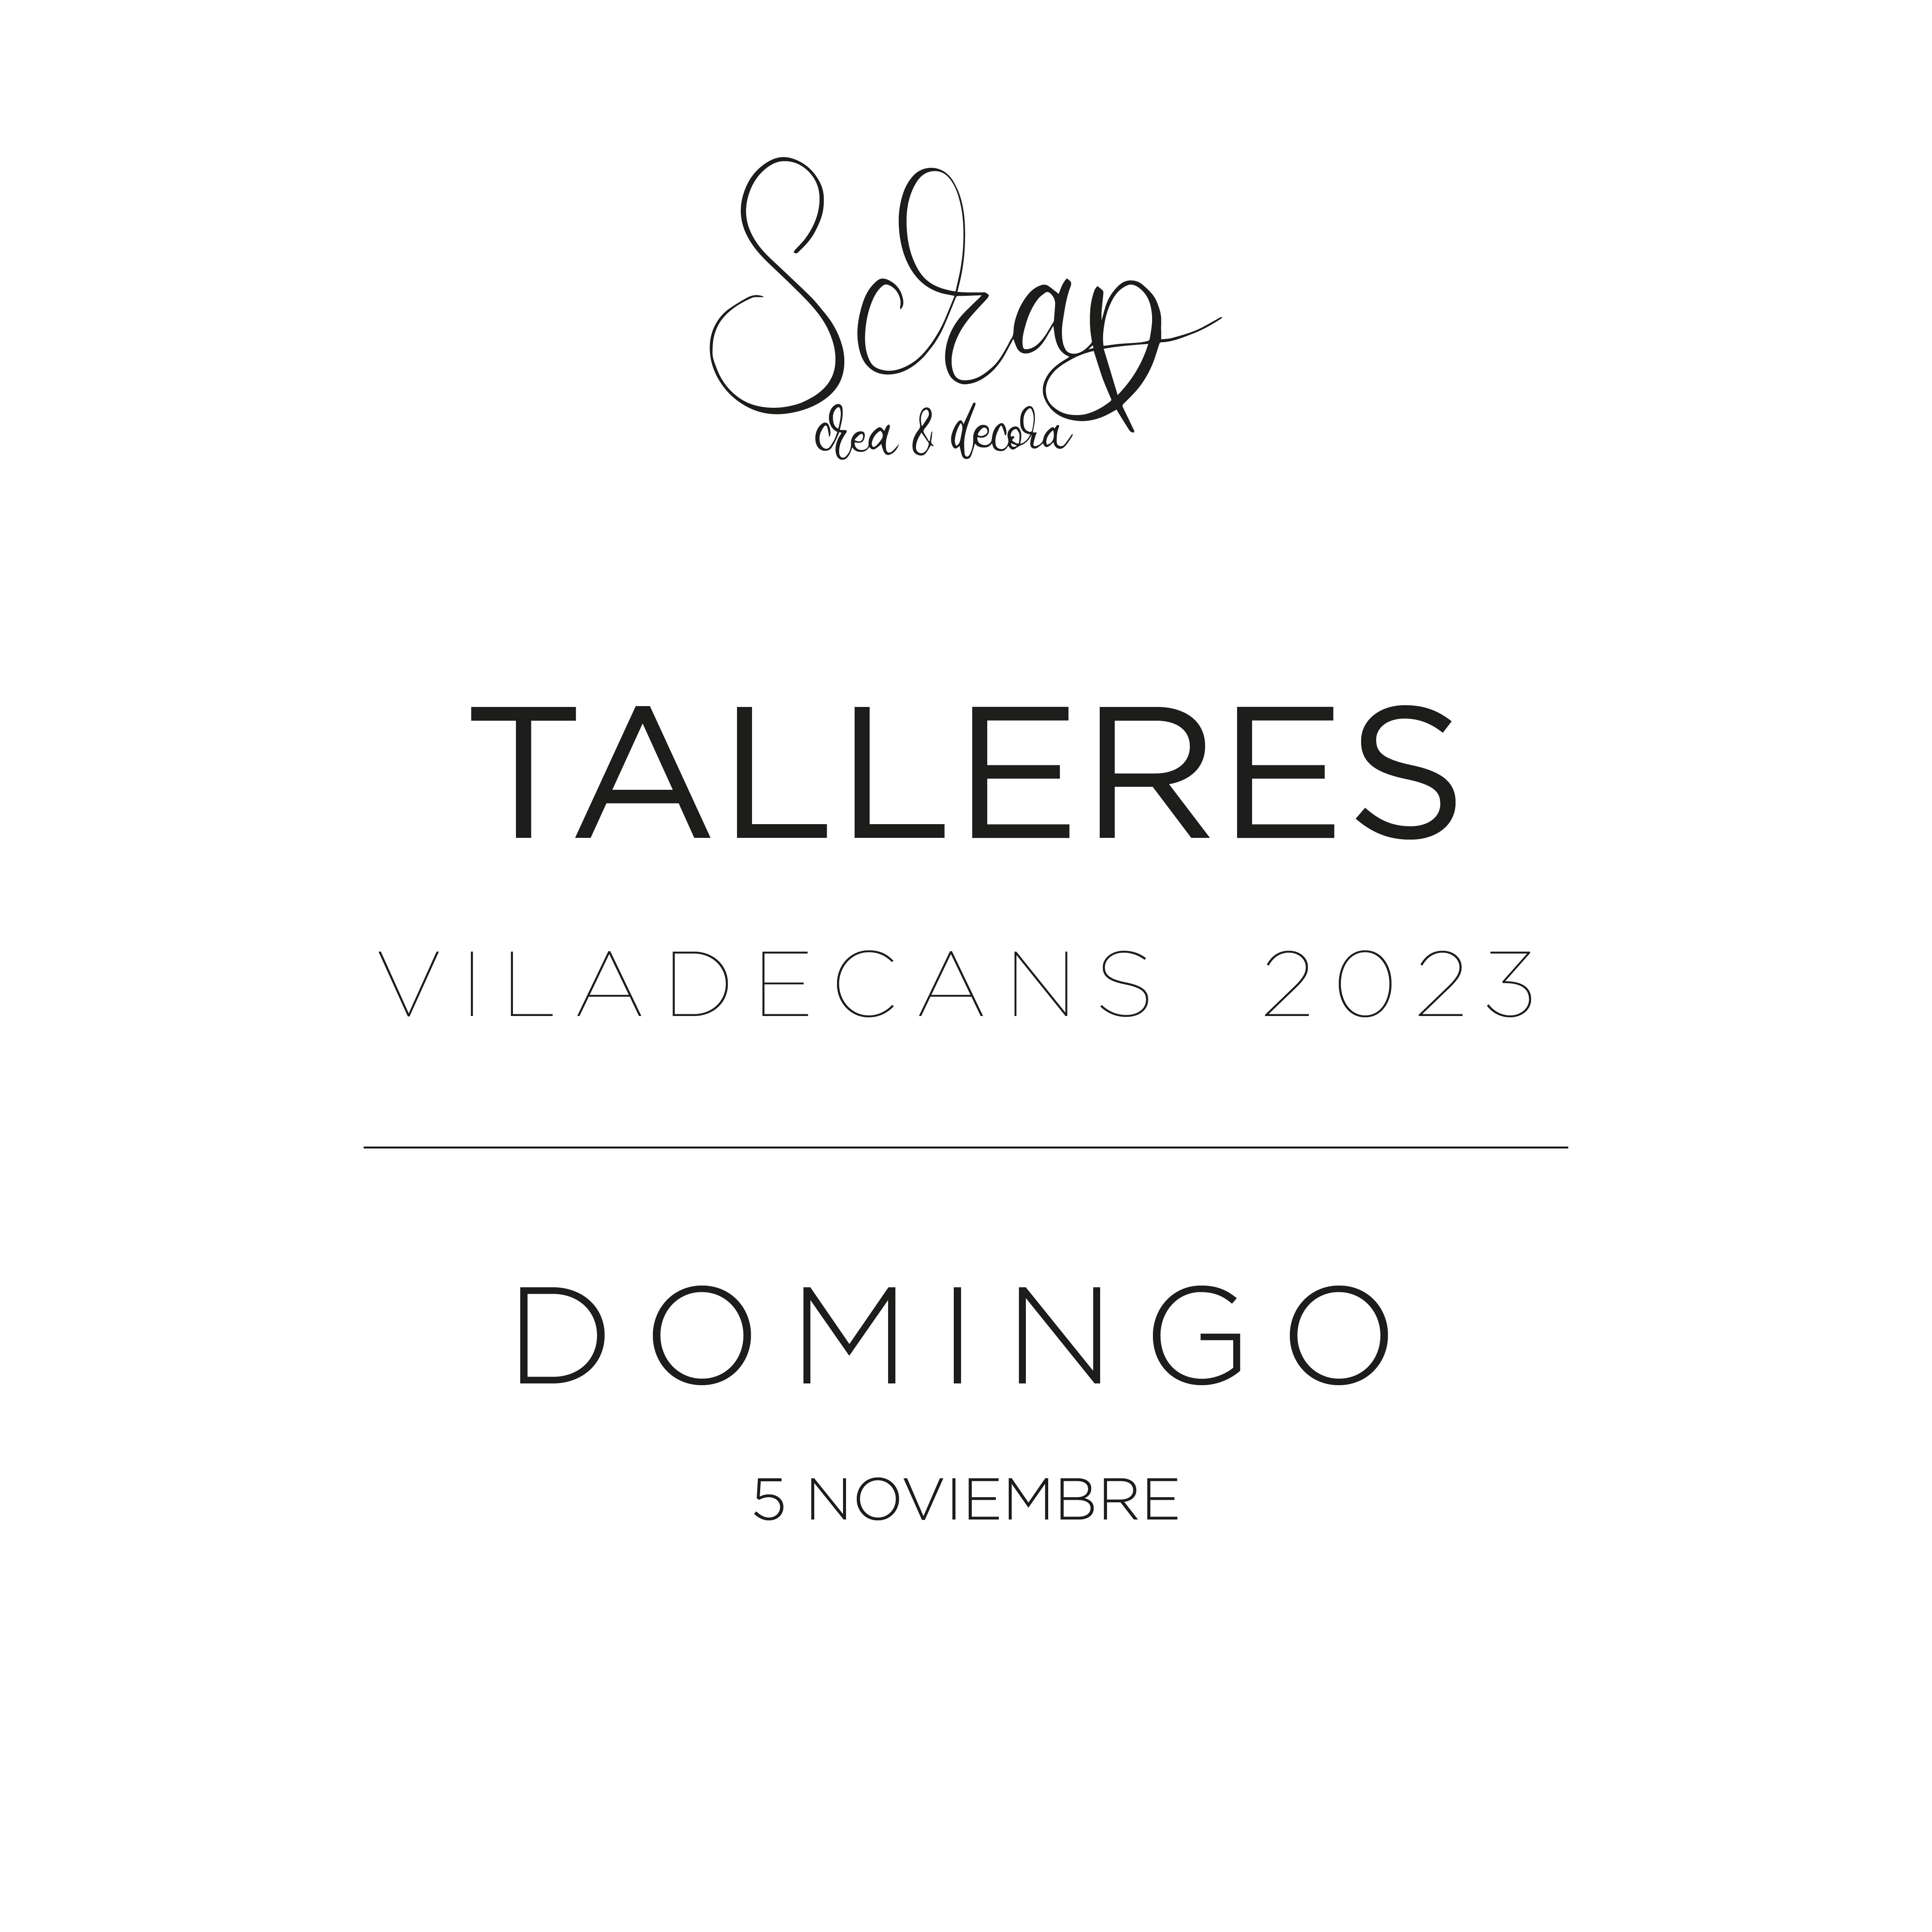 Talleres DOMINGO - 5 noviembre 2023